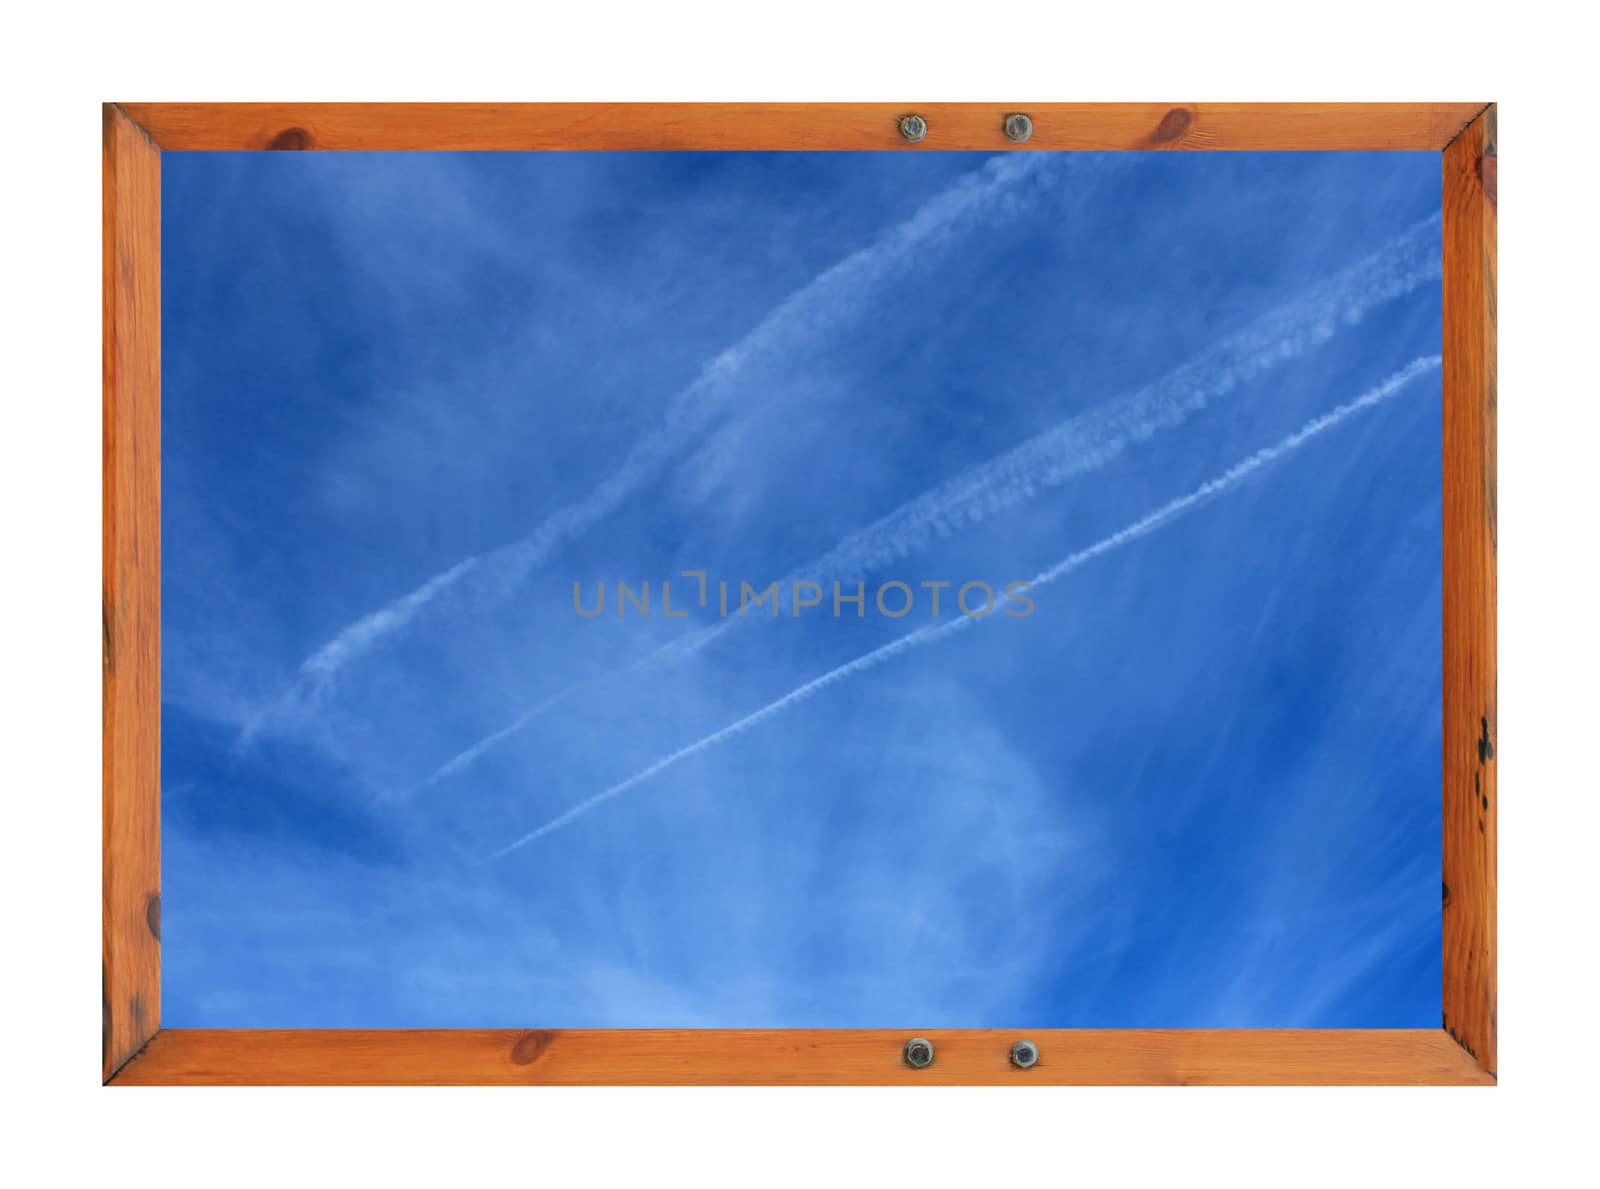 Vapor trails in blue sky by speedfighter